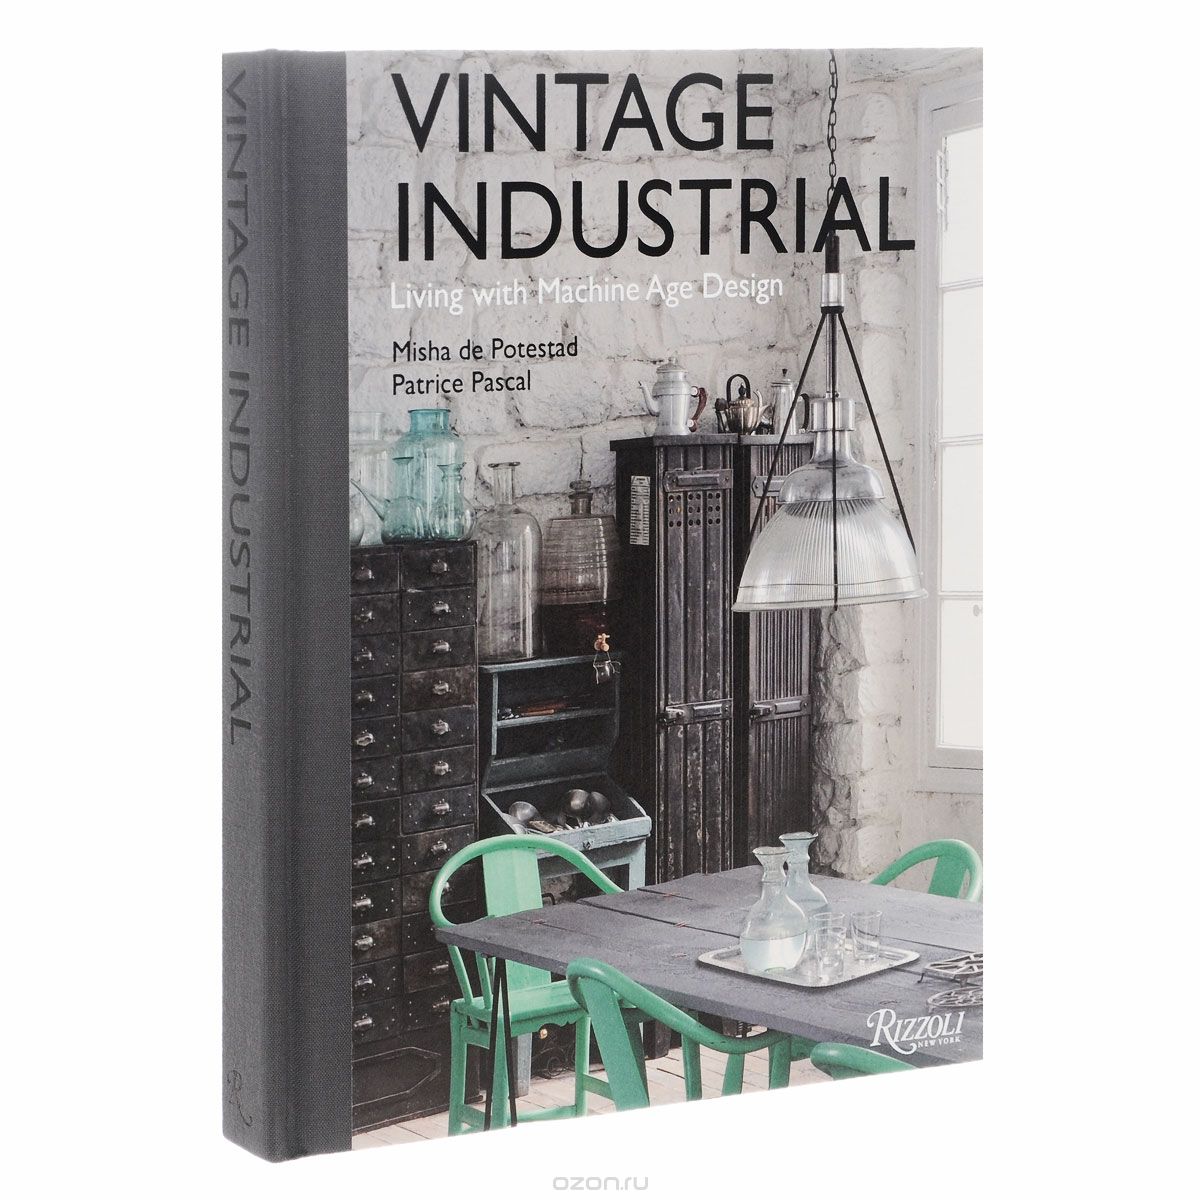 Скачать книгу "Vintage Industrial: Living with Machine Age Design"